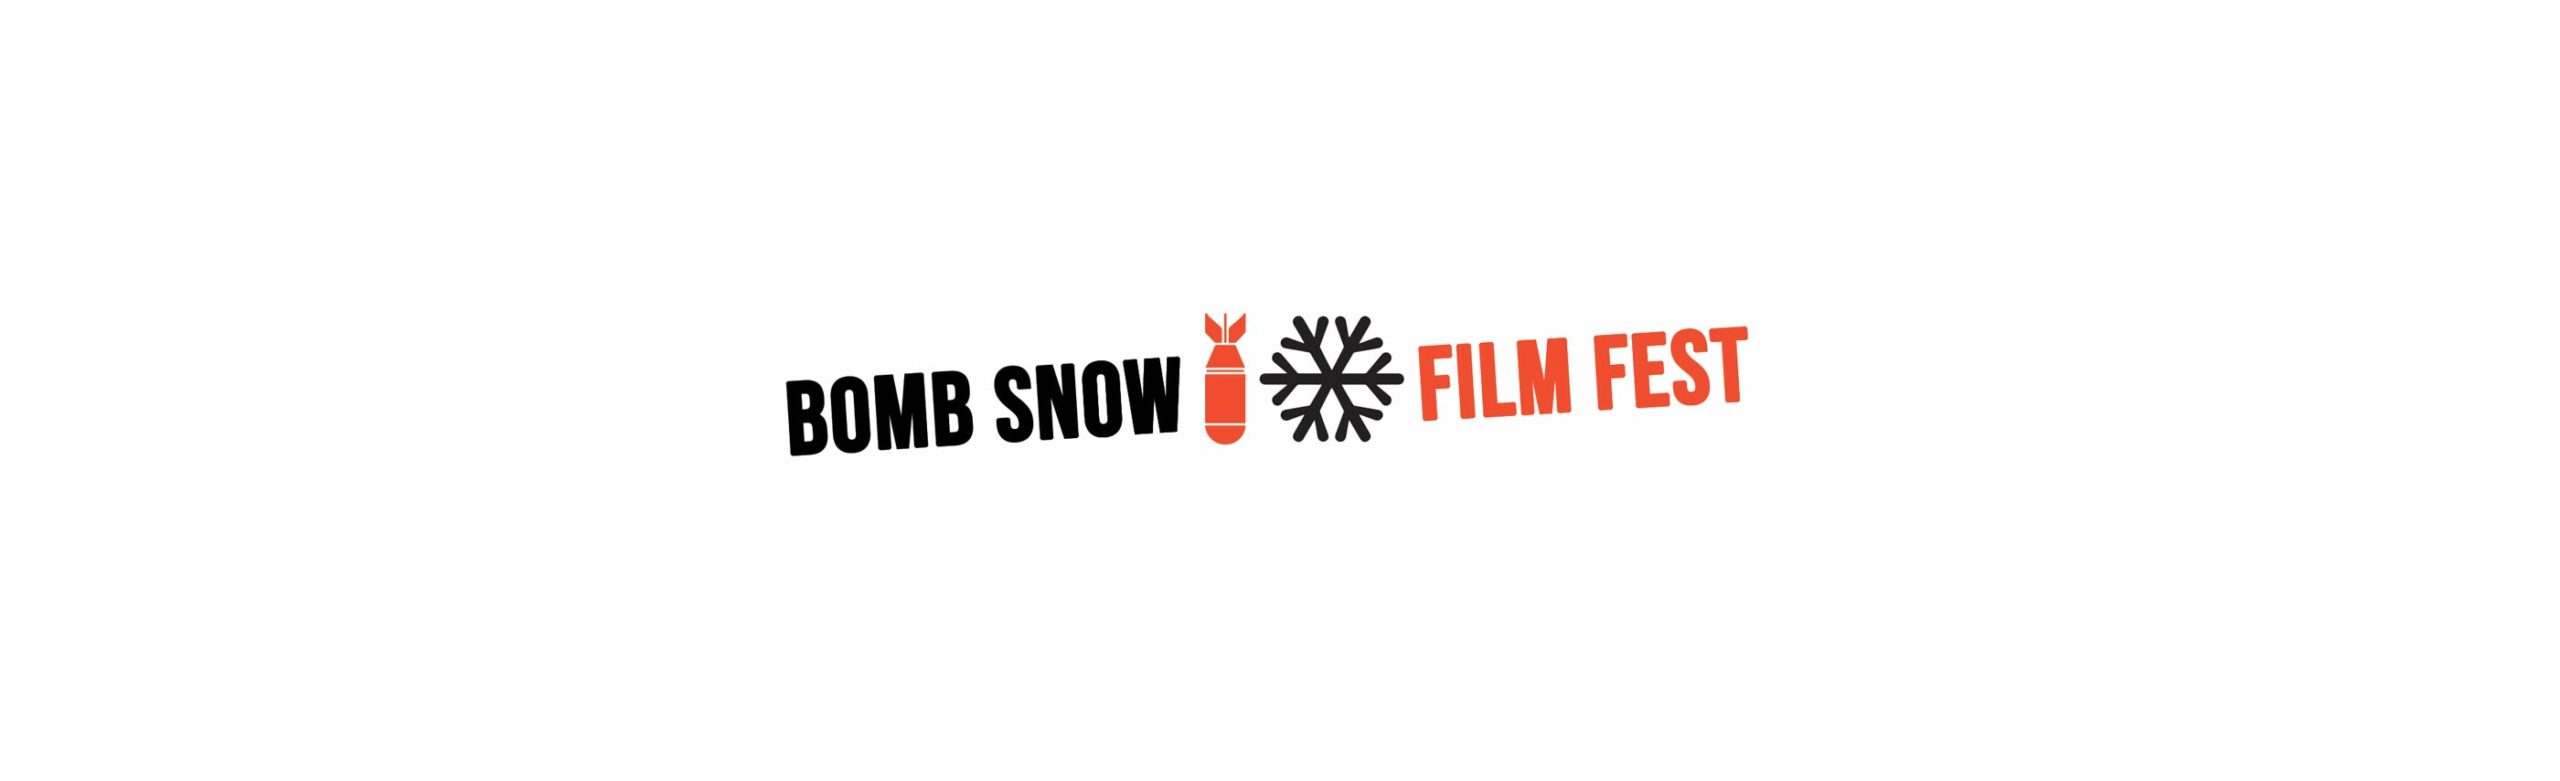 Bomb Snow Film Festival